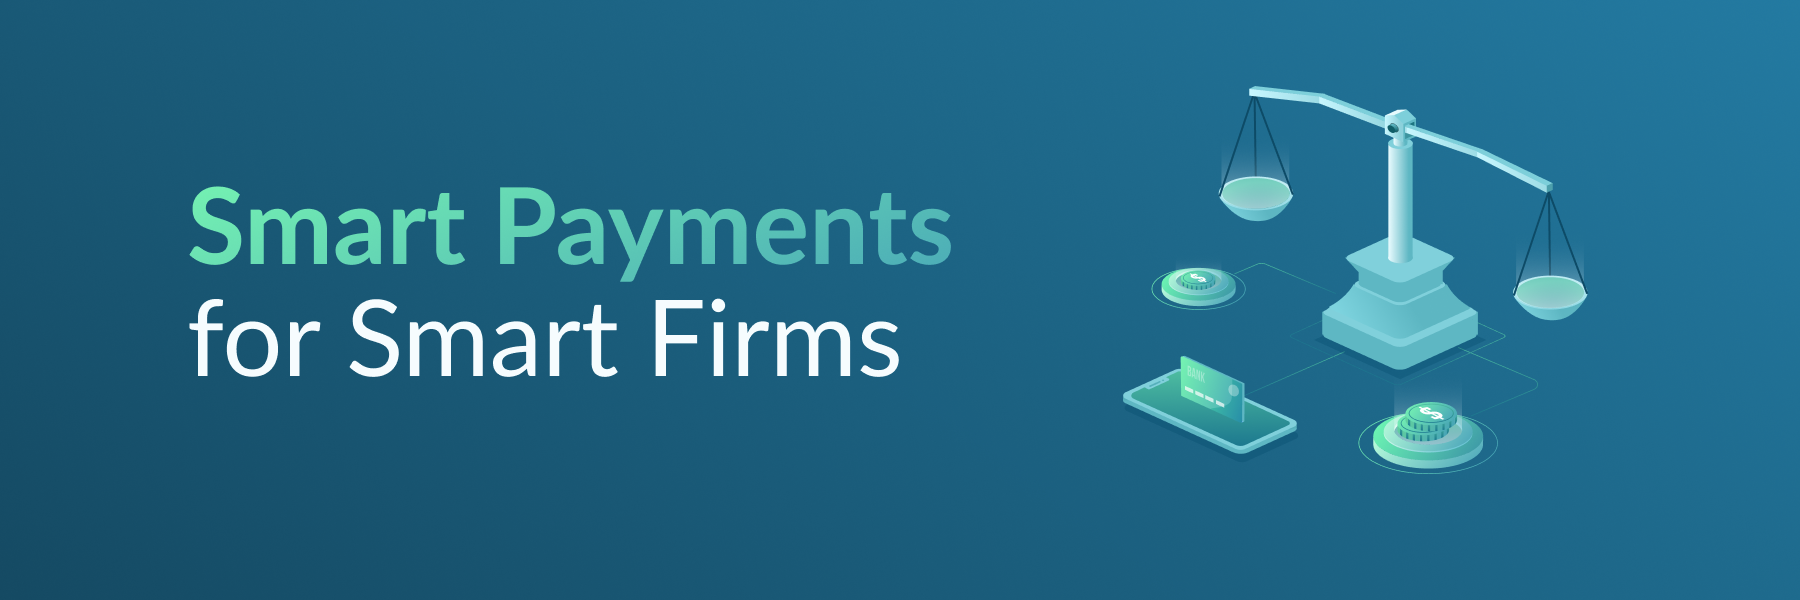 legal payments blog header